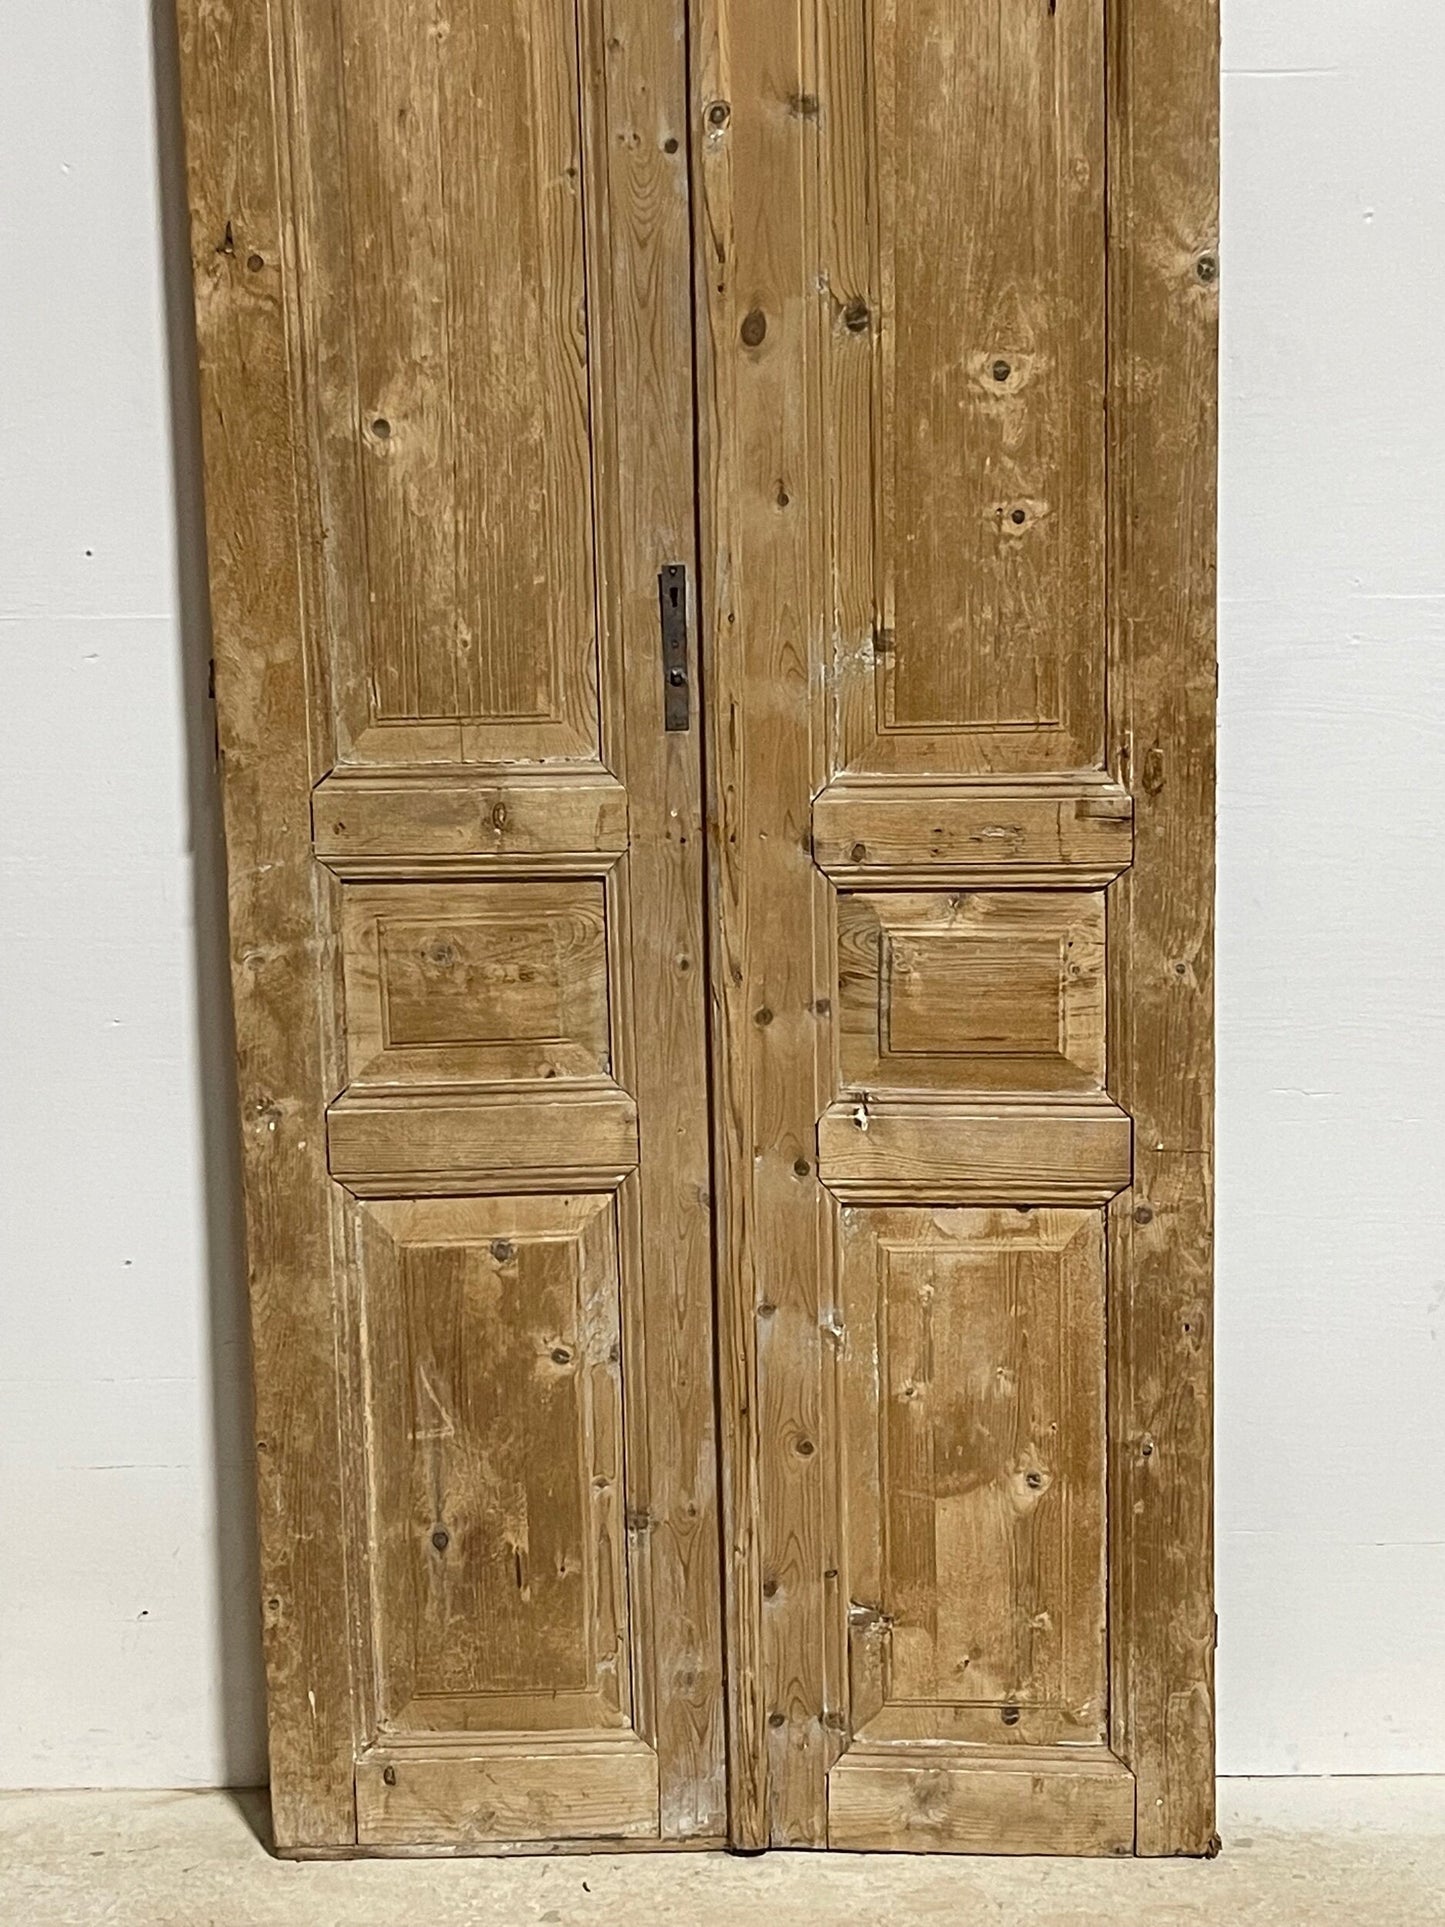 Antique French doors (89.5x37) H0204s